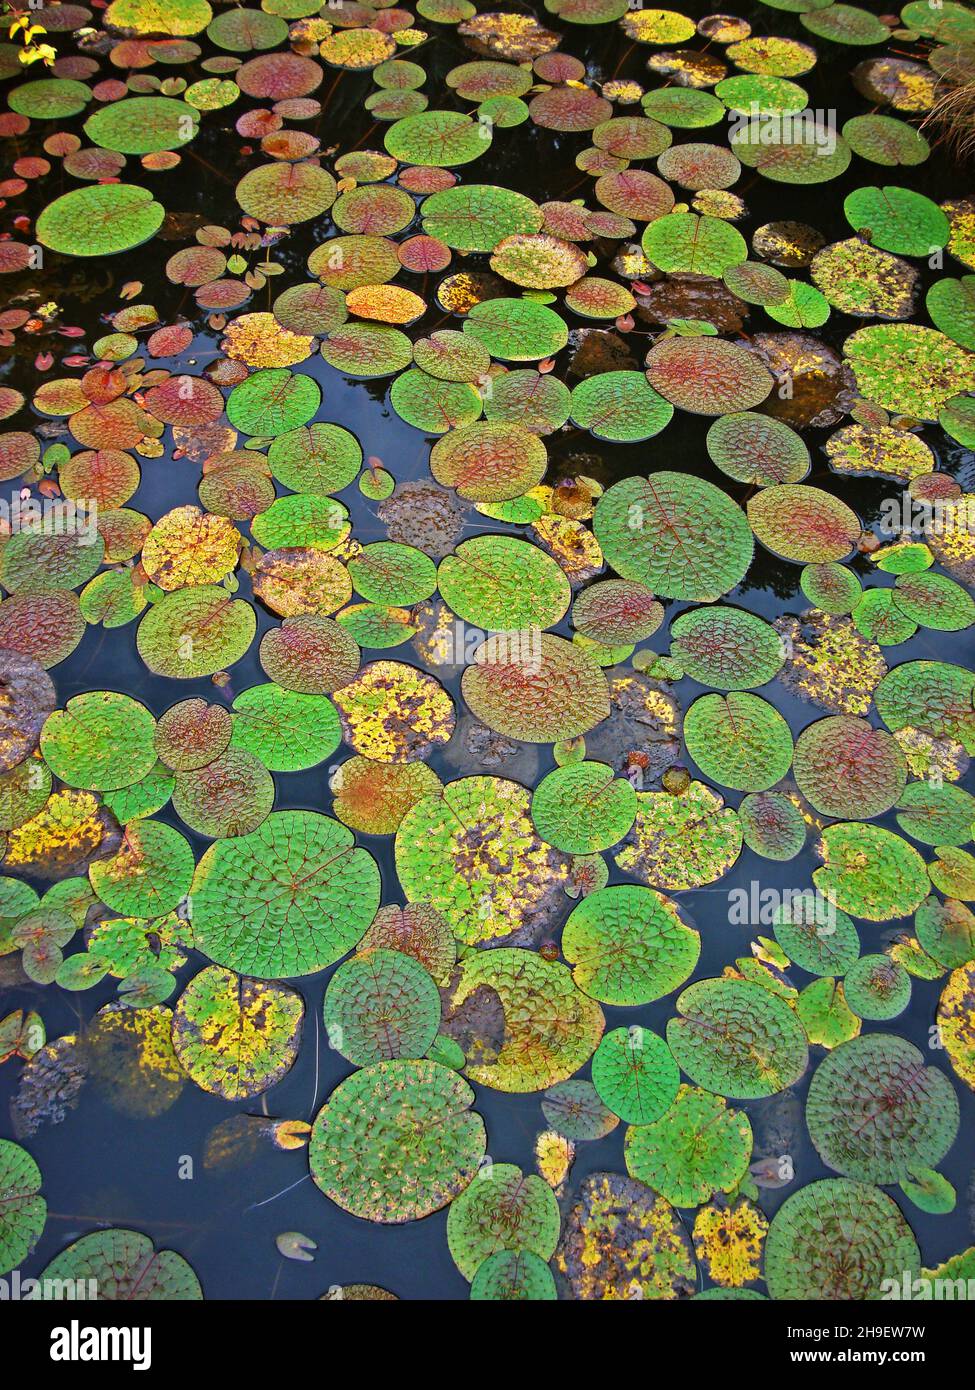 Aquatic plants on lake (Euryale ferox) Stock Photo